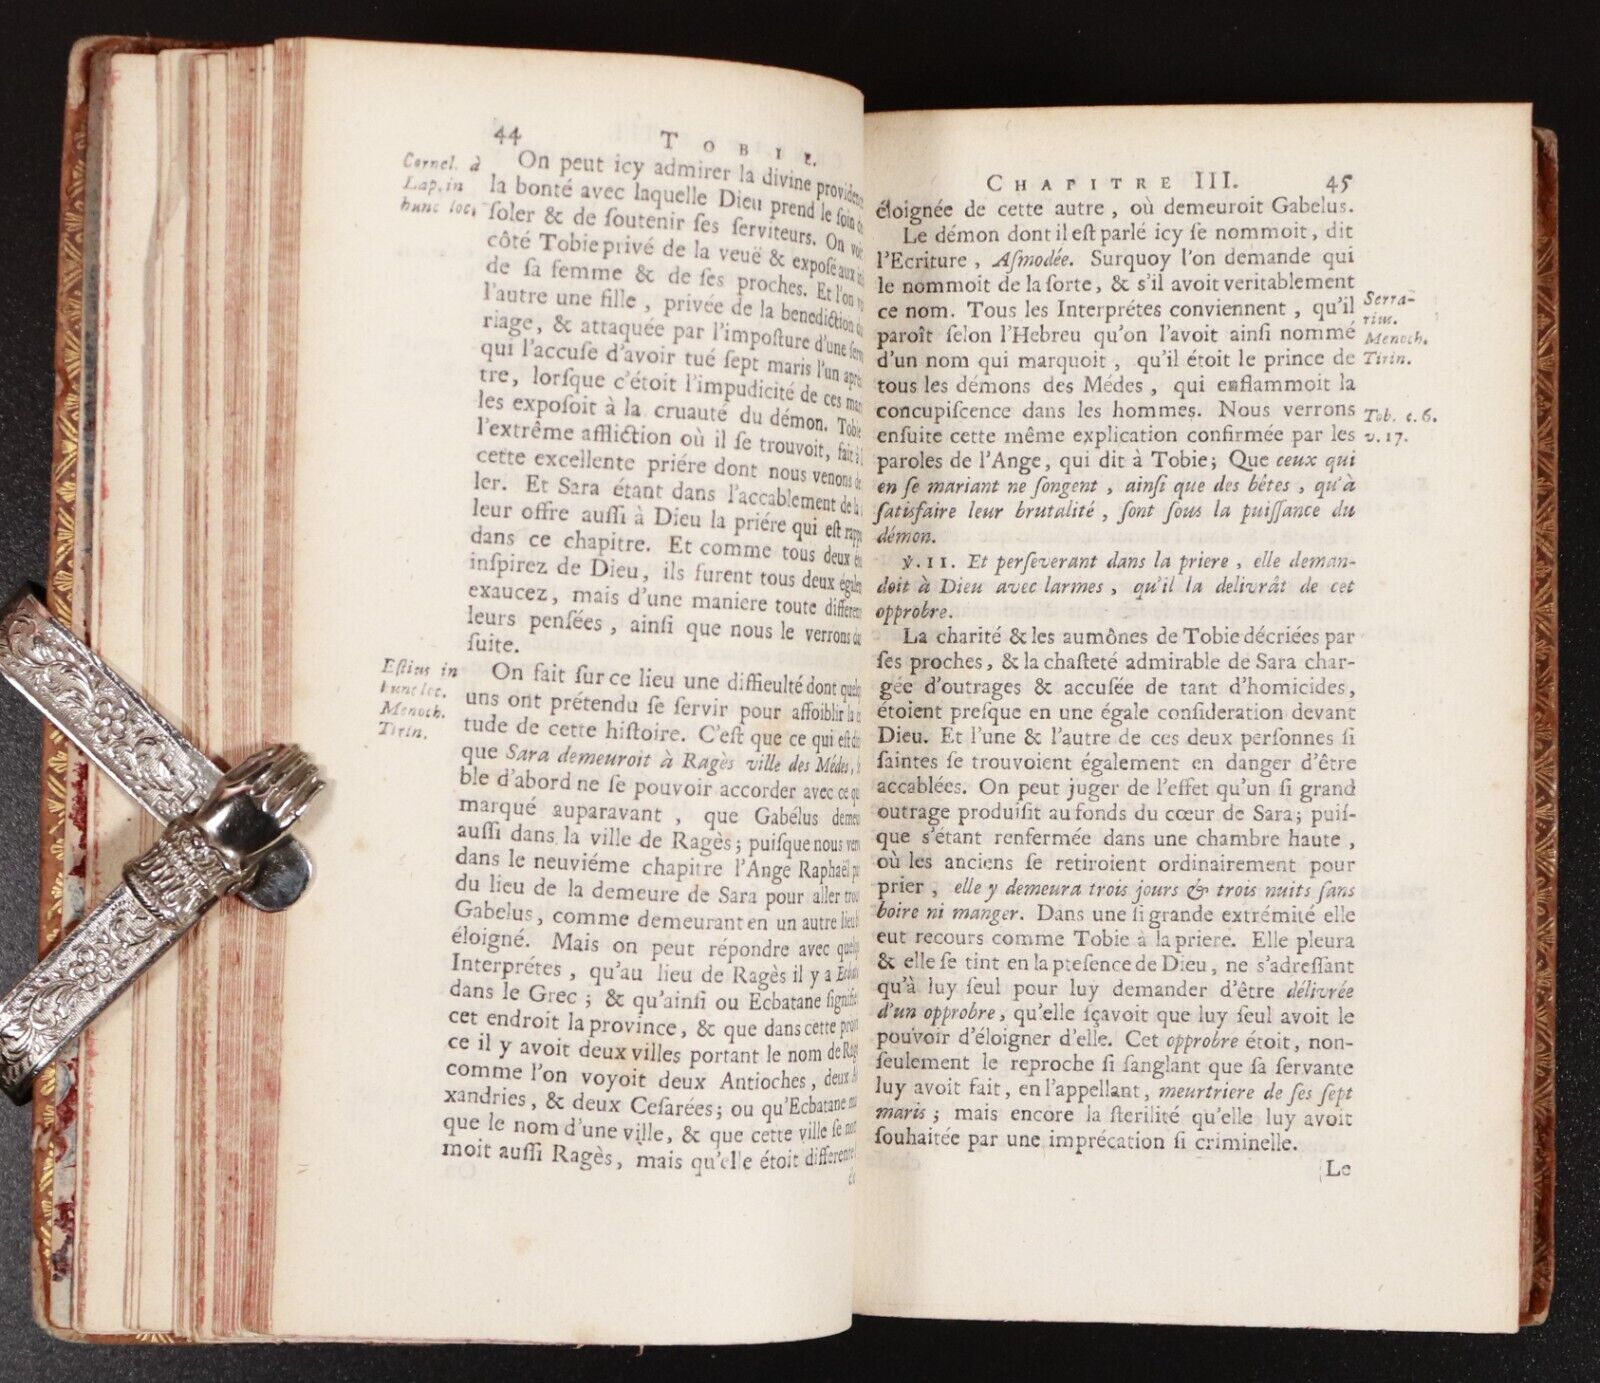 1719 Tobie Judith et Esther Antiquarian French Theology Book Maistre De Sacy